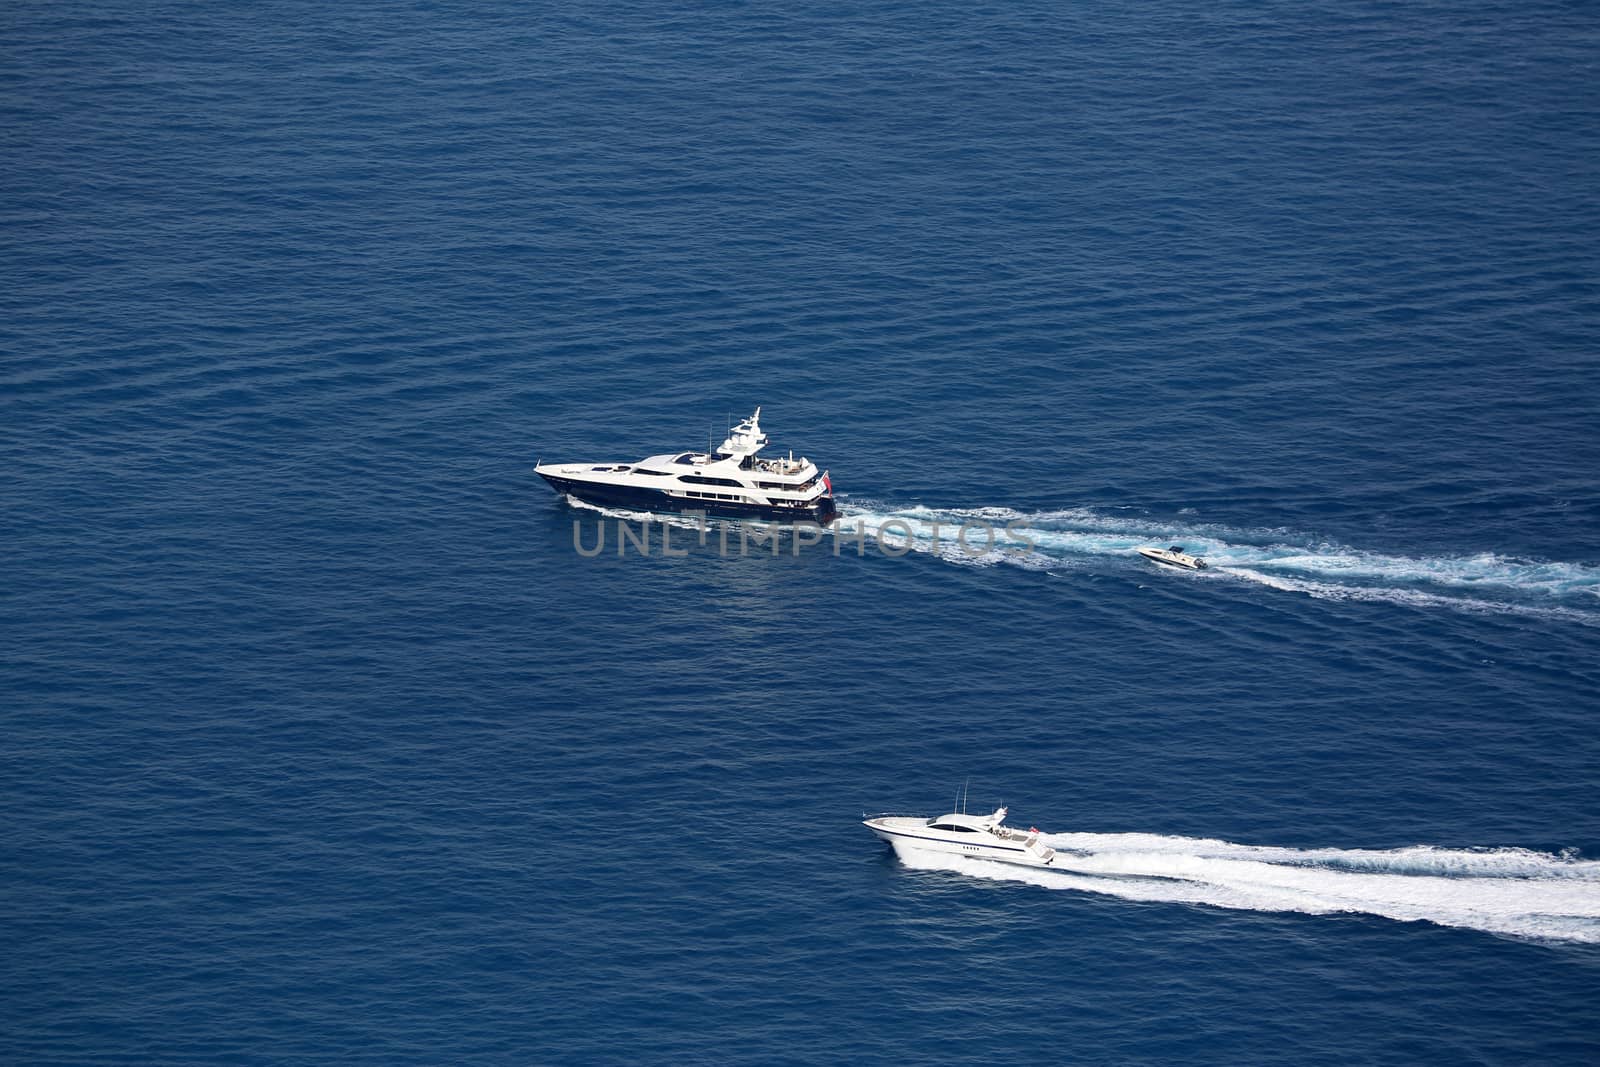 Boat Wake on Mediterranean Sea by bensib